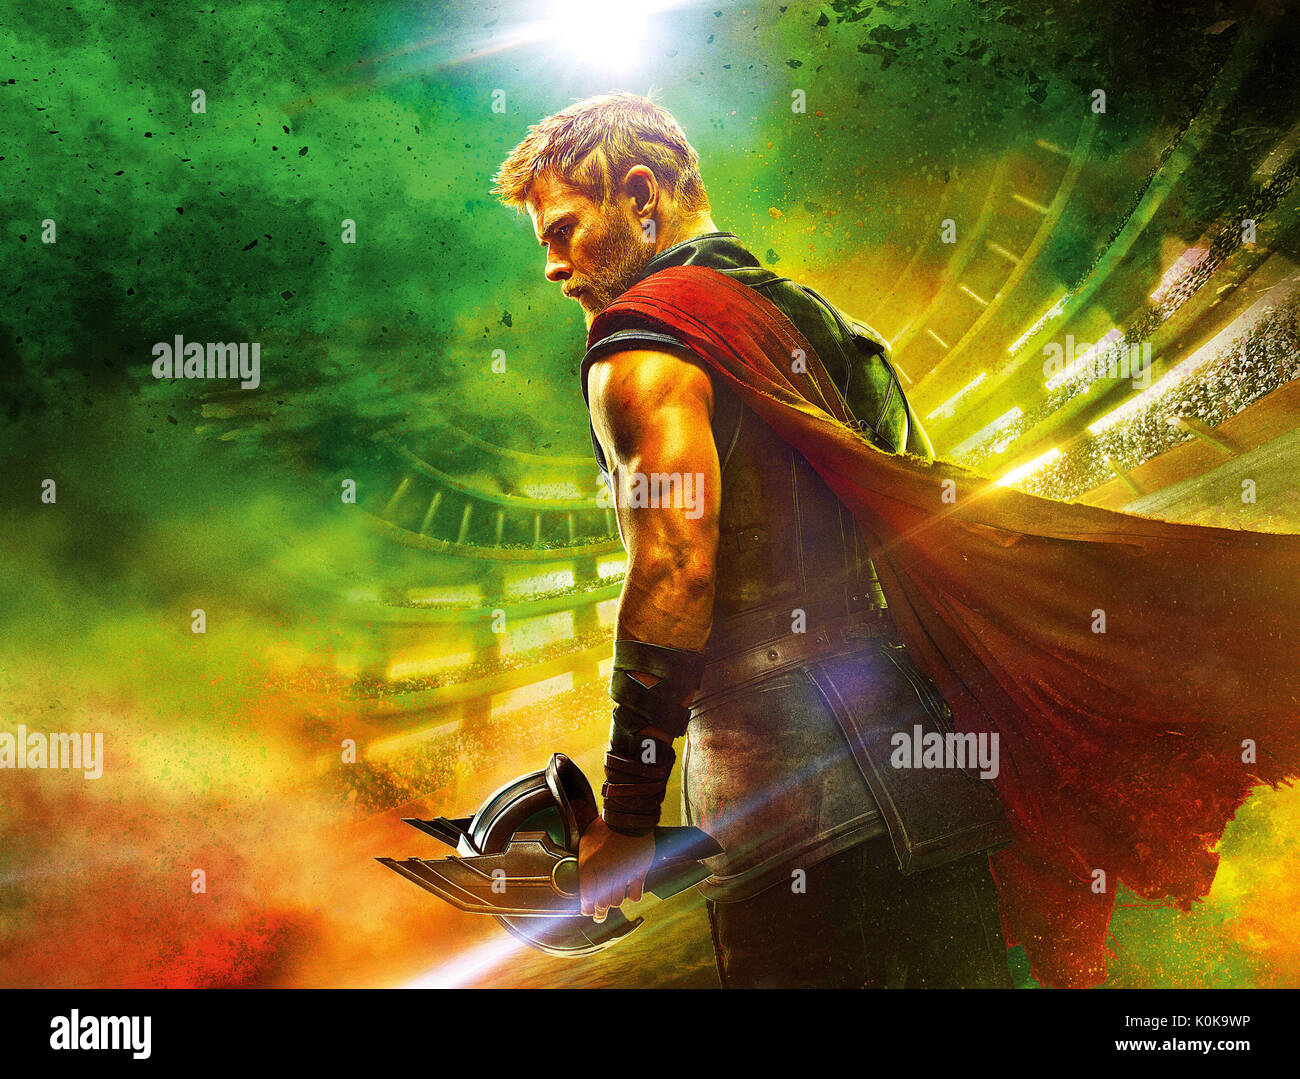 Poster Thor: Ragnarok - Thor And Hulk